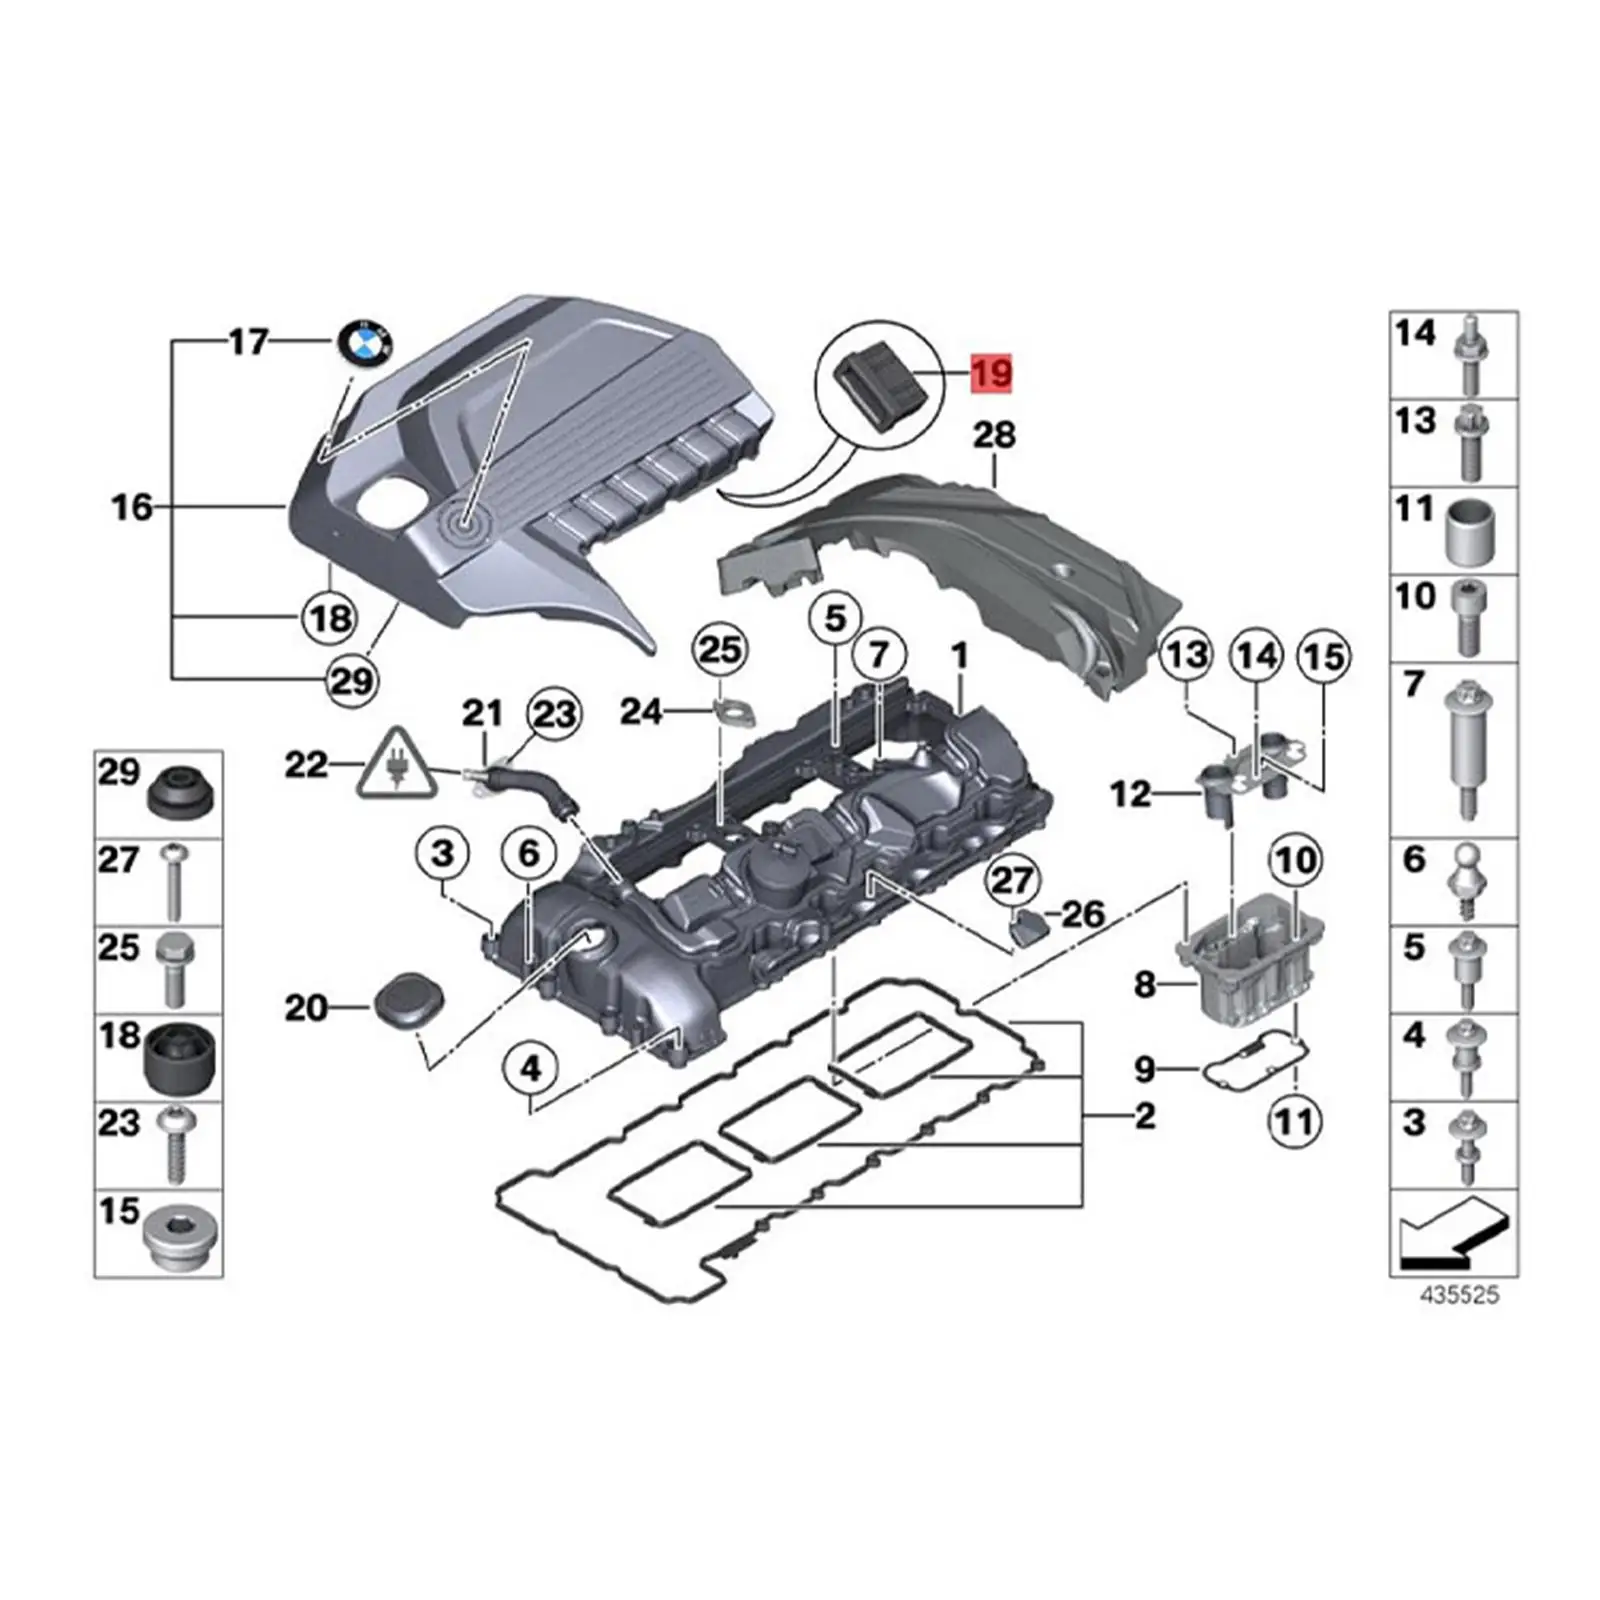 Upper Radiator Mounts Repair Parts 17111712911 for BMW E32 735i E32 740i E32 735il E39 540i E34 530i